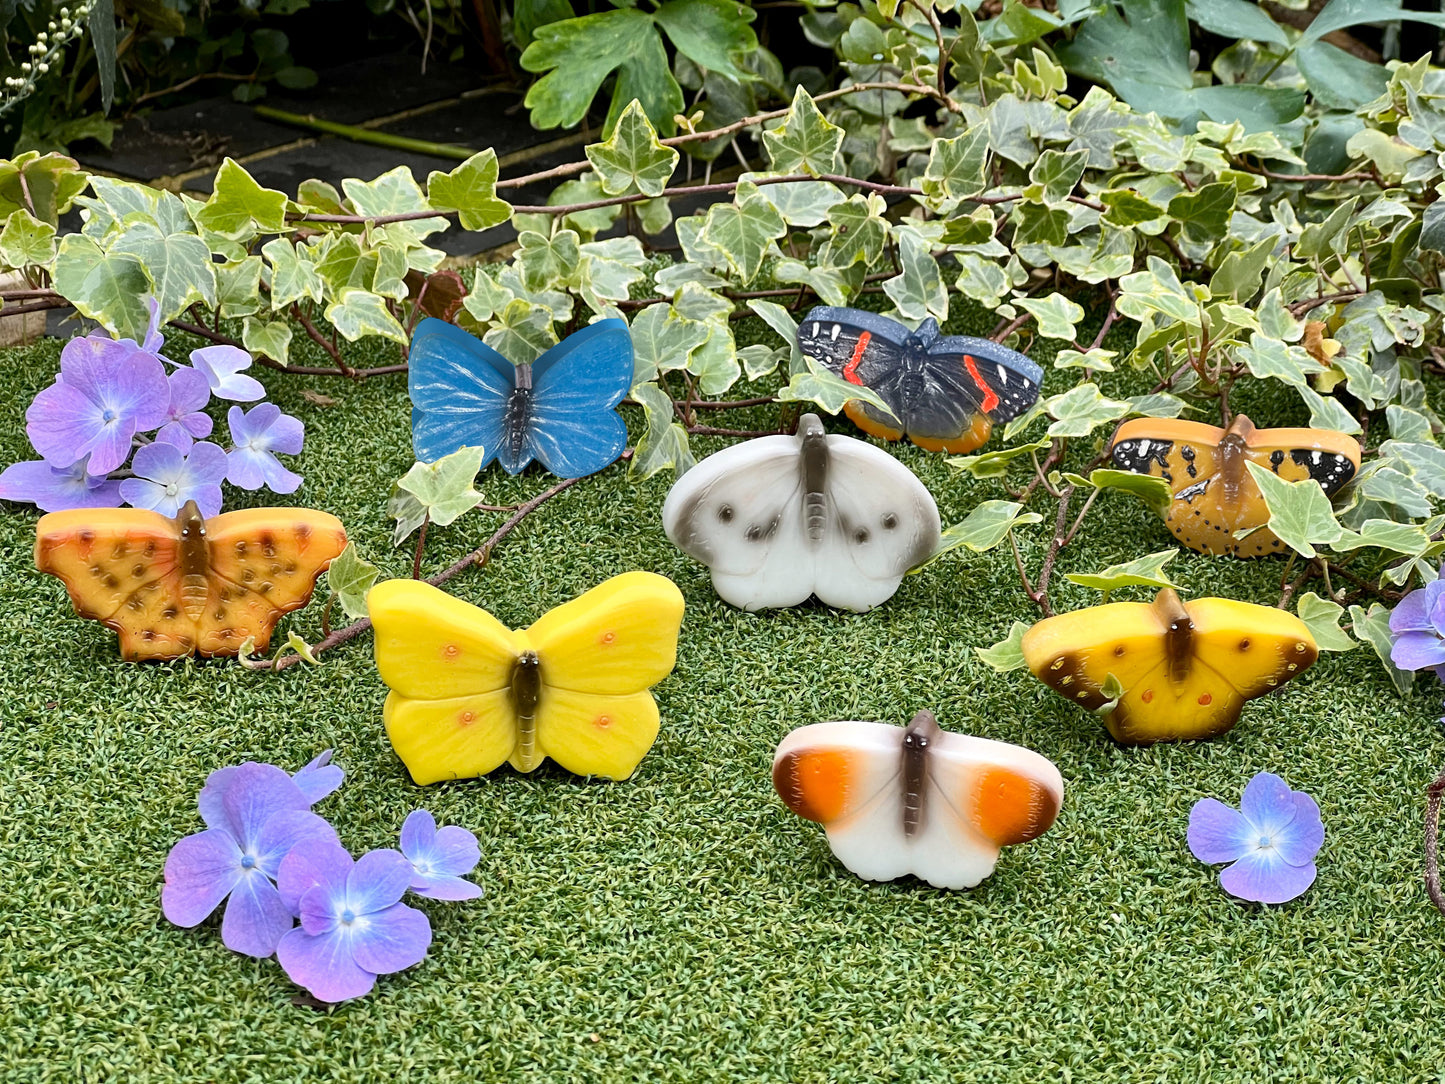 Butterfly Sensory Play Stones